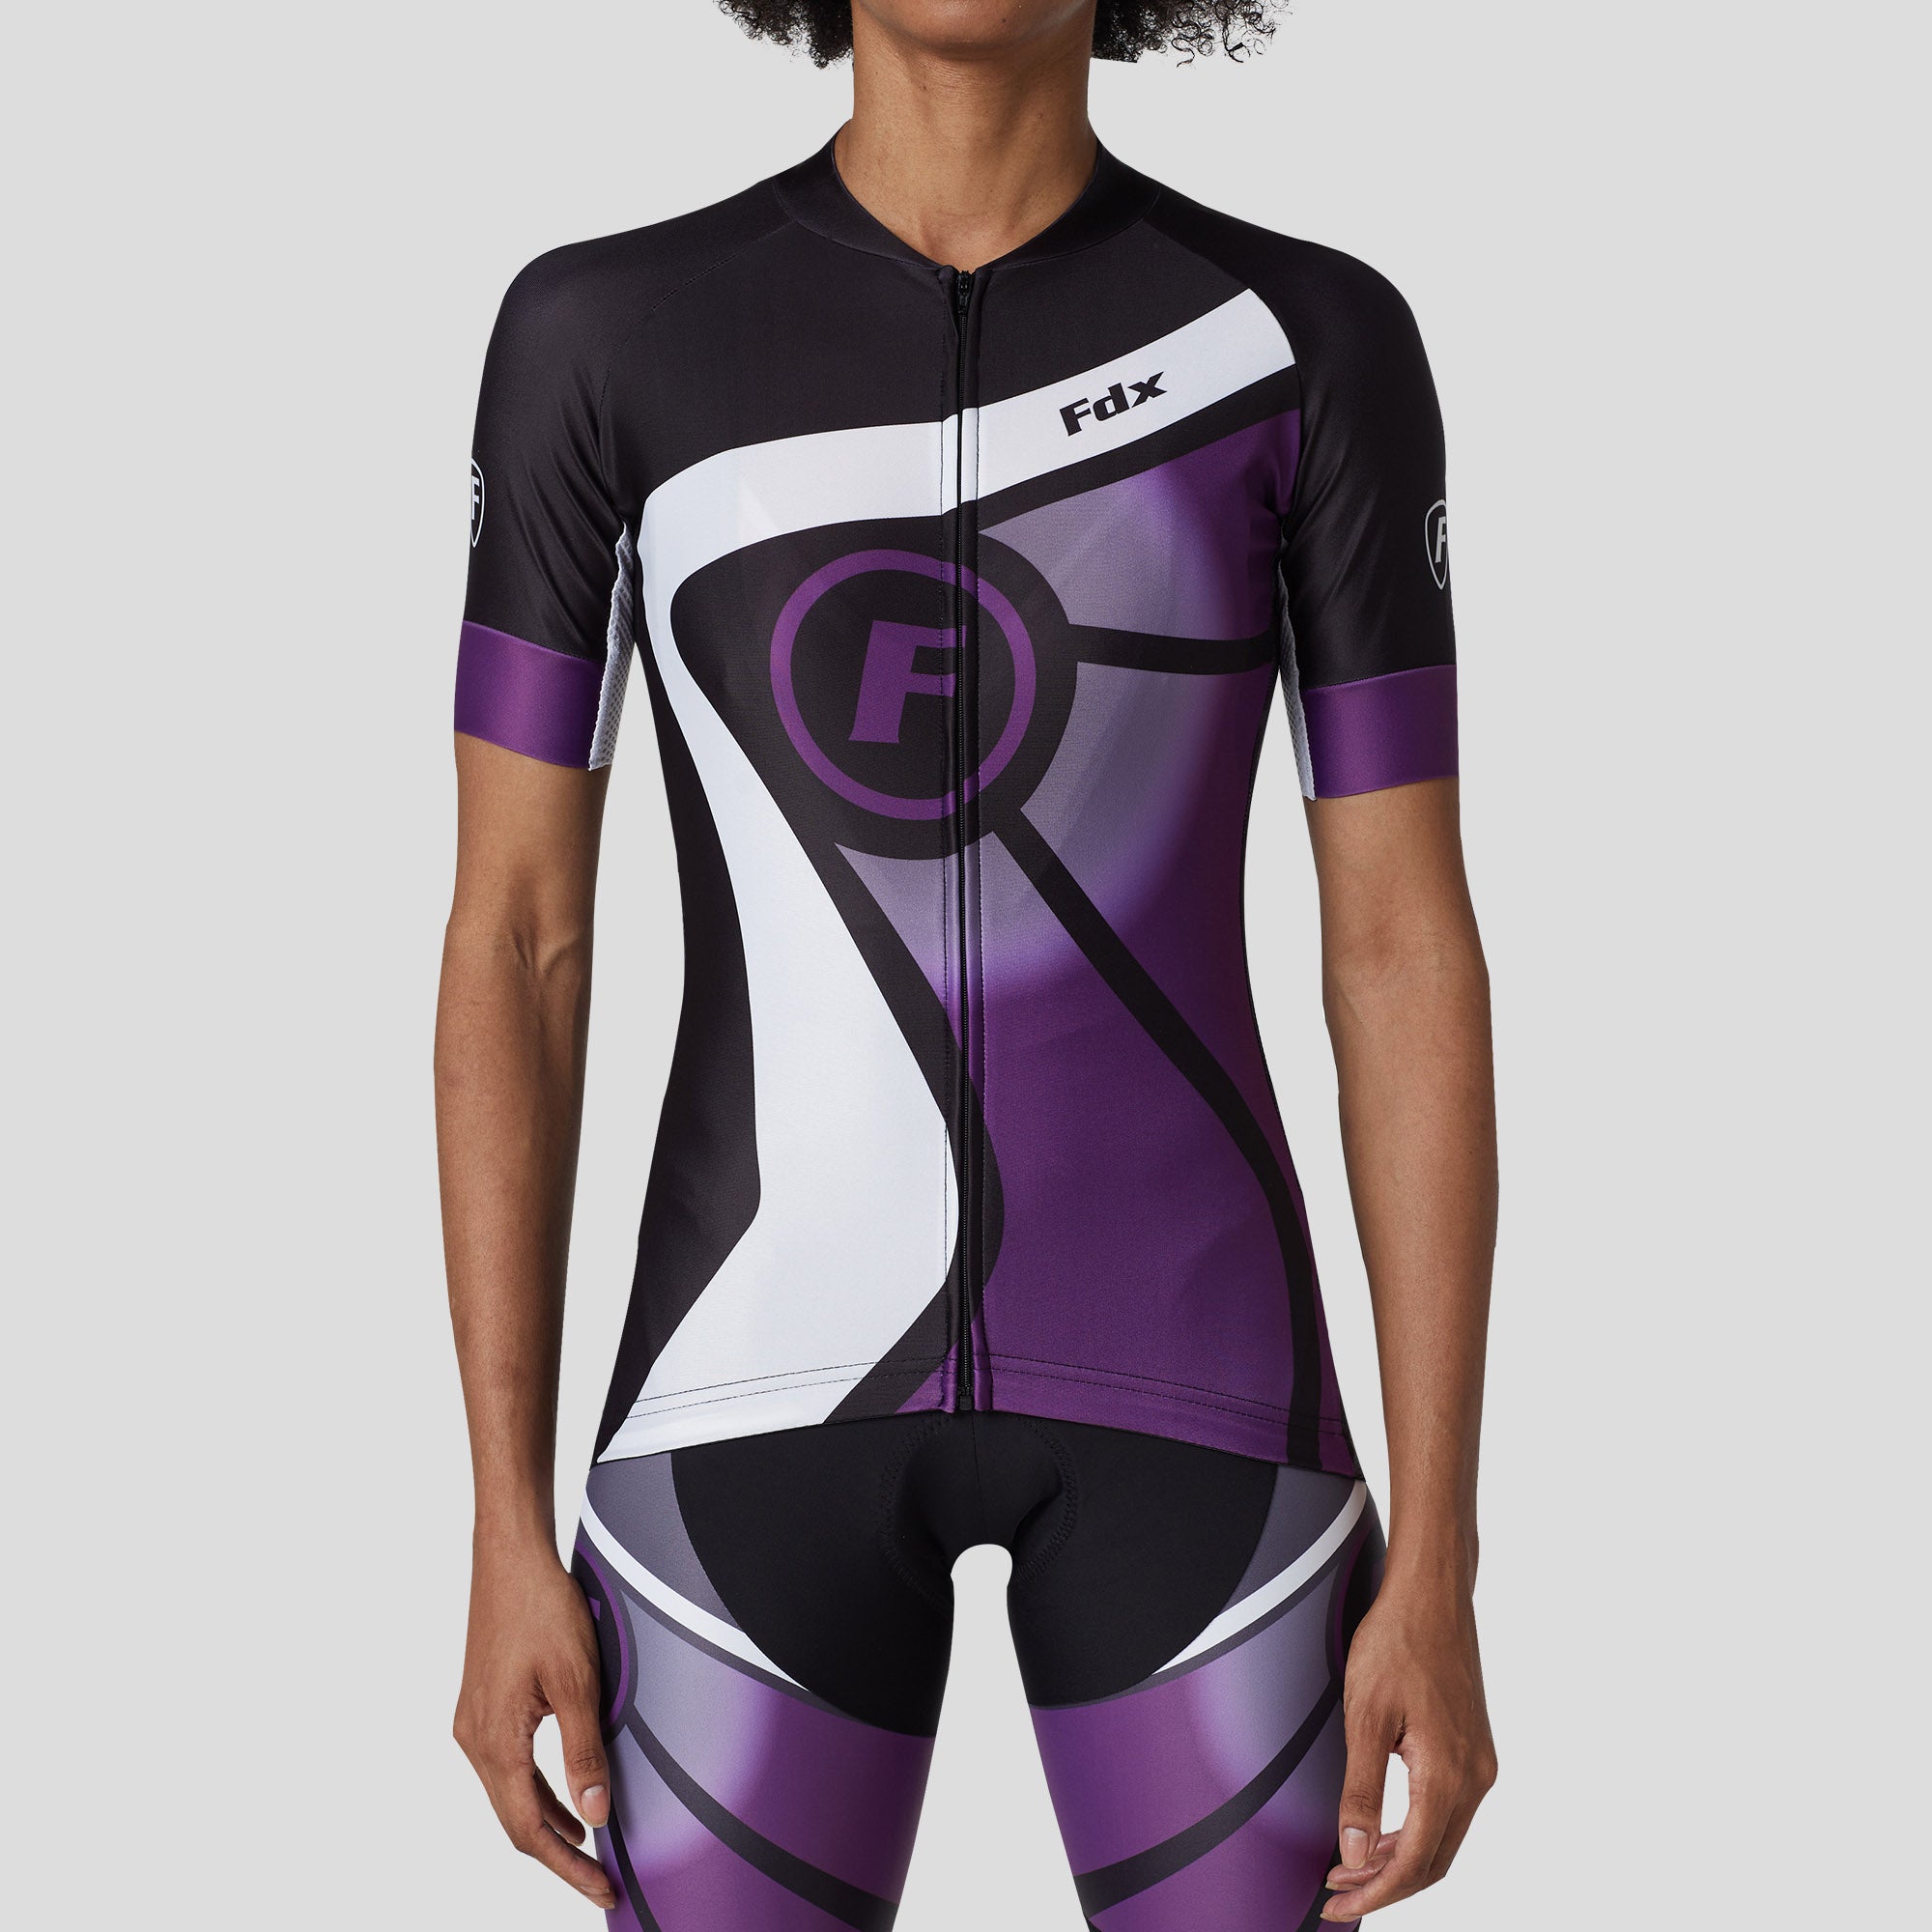 Fdx Women's Black & Purple Short Sleeve Cycling Jersey for Summer Best Road Bike Wear Top Light Weight, Full Zipper, Pockets & Hi viz Reflectors - Signature